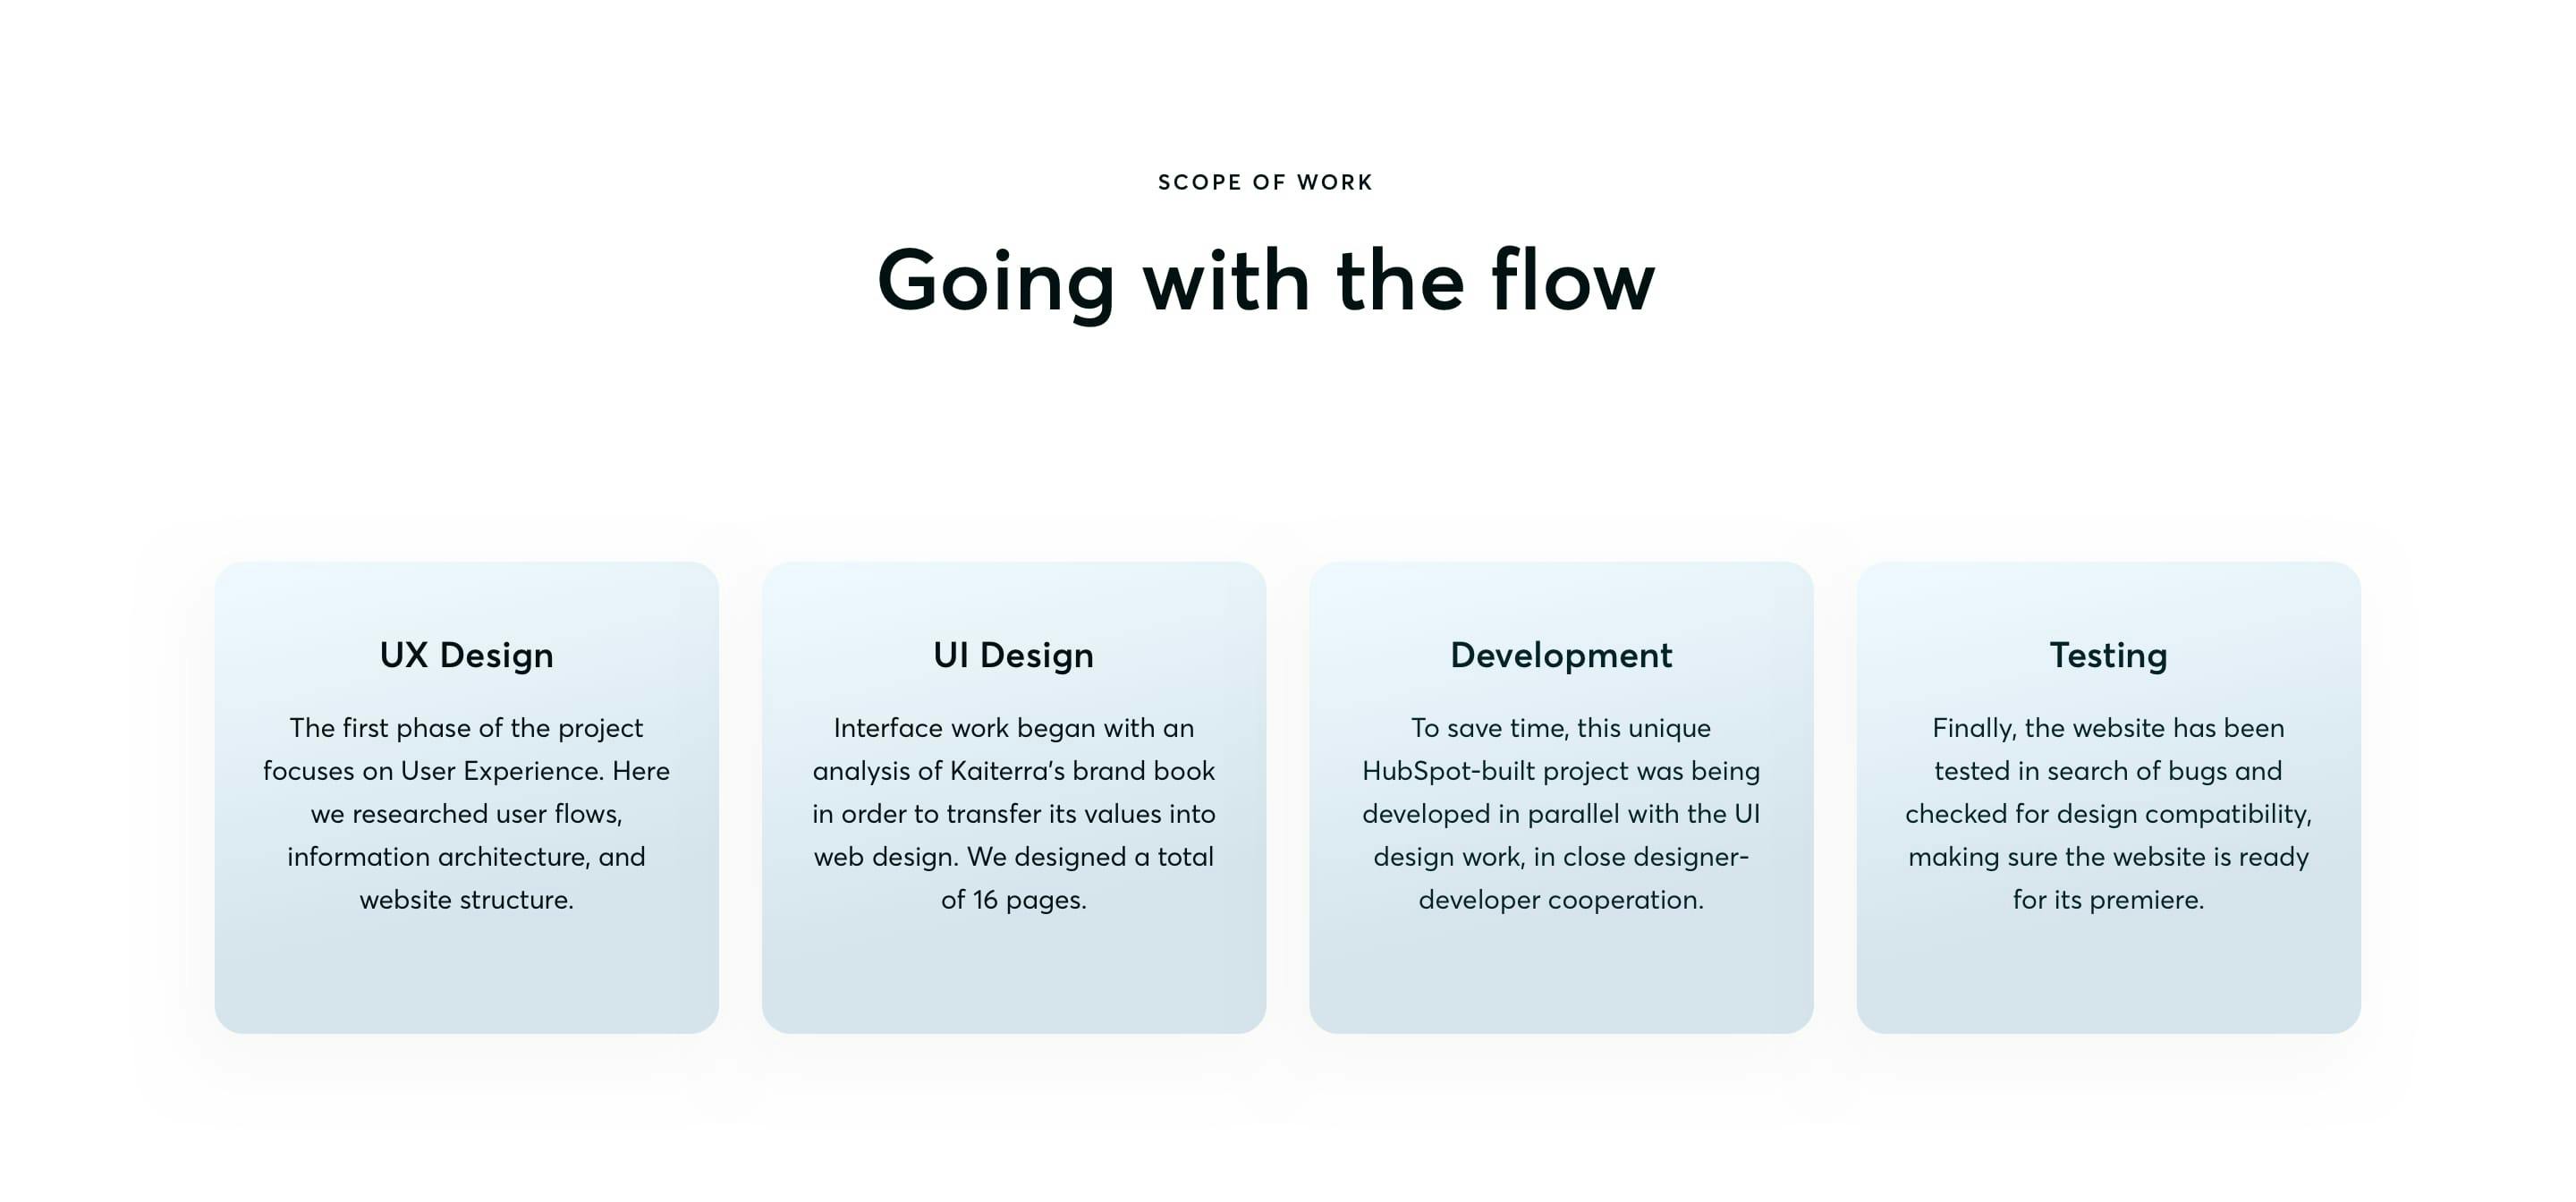 Scope of work, UX design, UI Design, Development, Testing